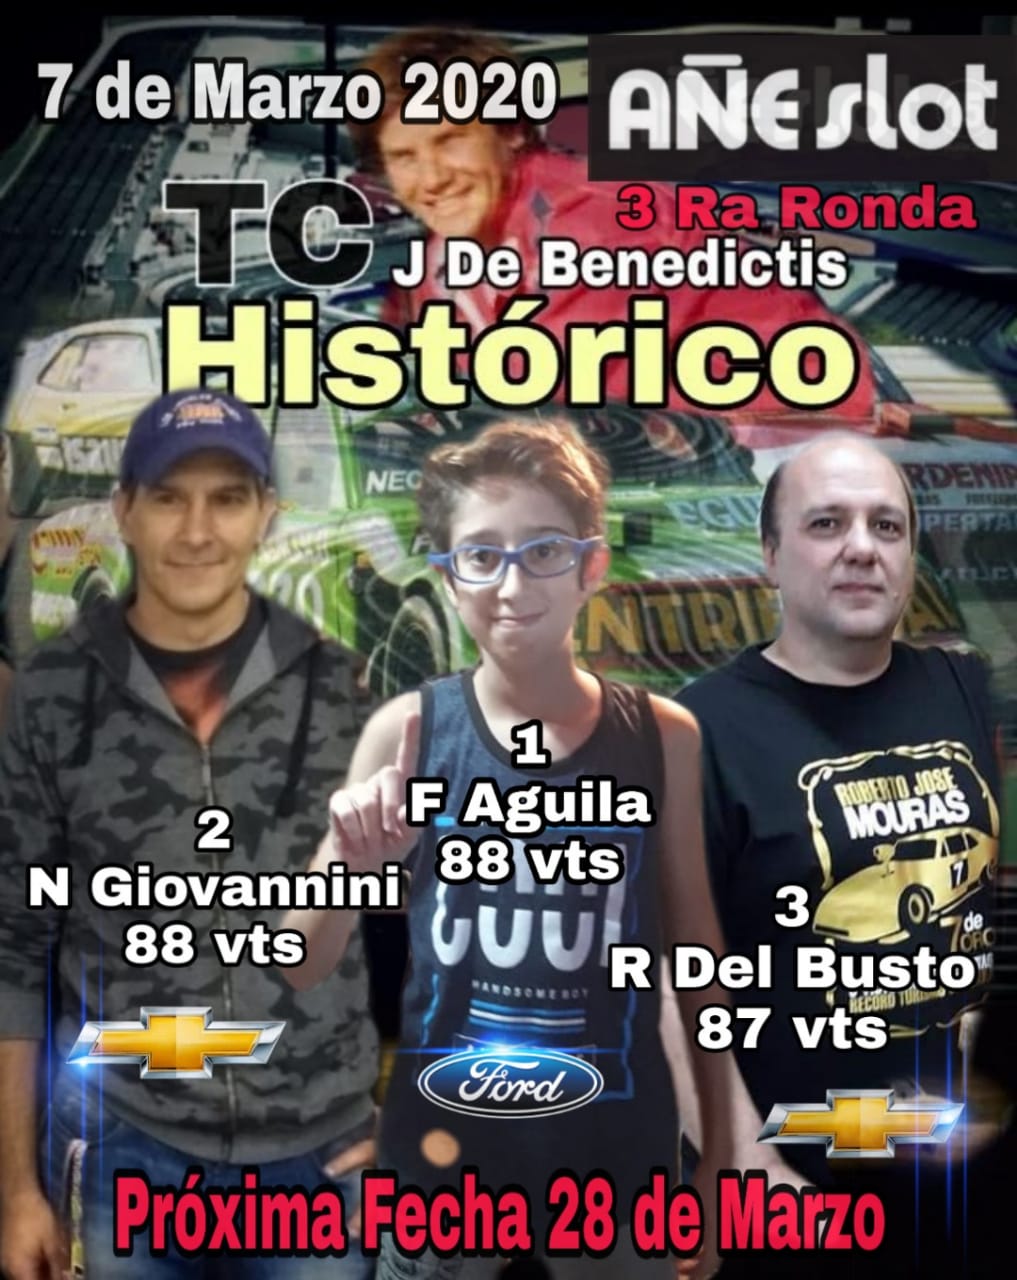 TC Histórico Torneo  “Johnny” De Benedictis ▬ 3° Ronda ▬ V. TÉCNICA ▬ CLASIFICACIÓN OFICIAL Img-2520